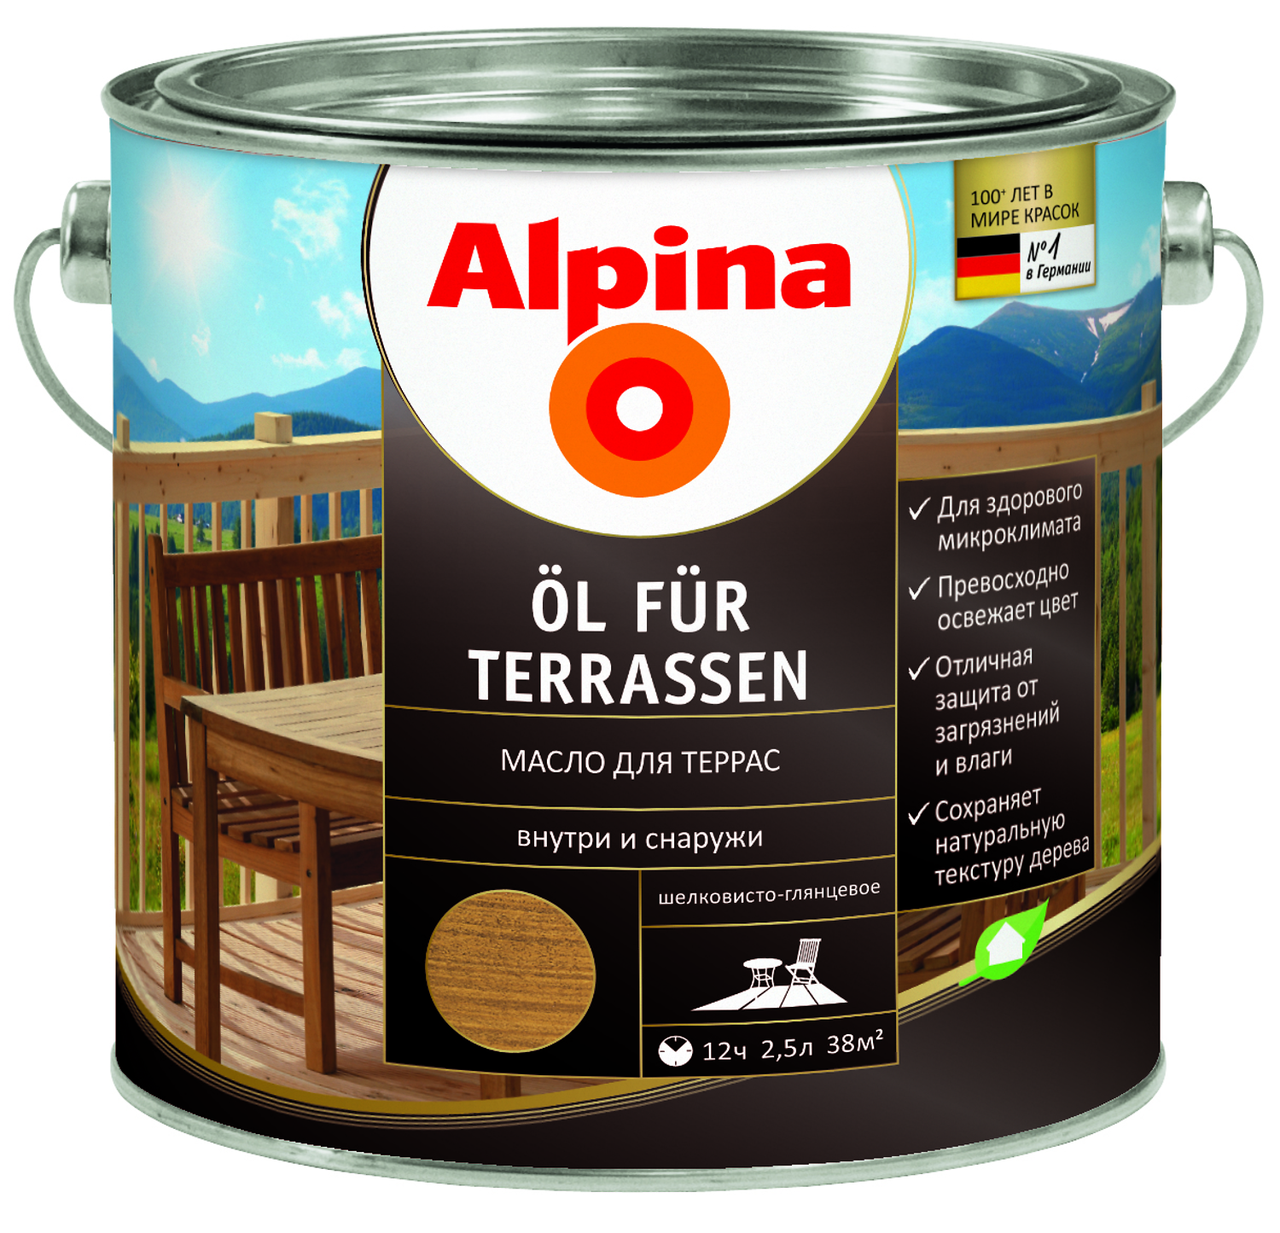 Масло для террас (Alpina Öl für Terrassen) Прозрачный 2,5 л.